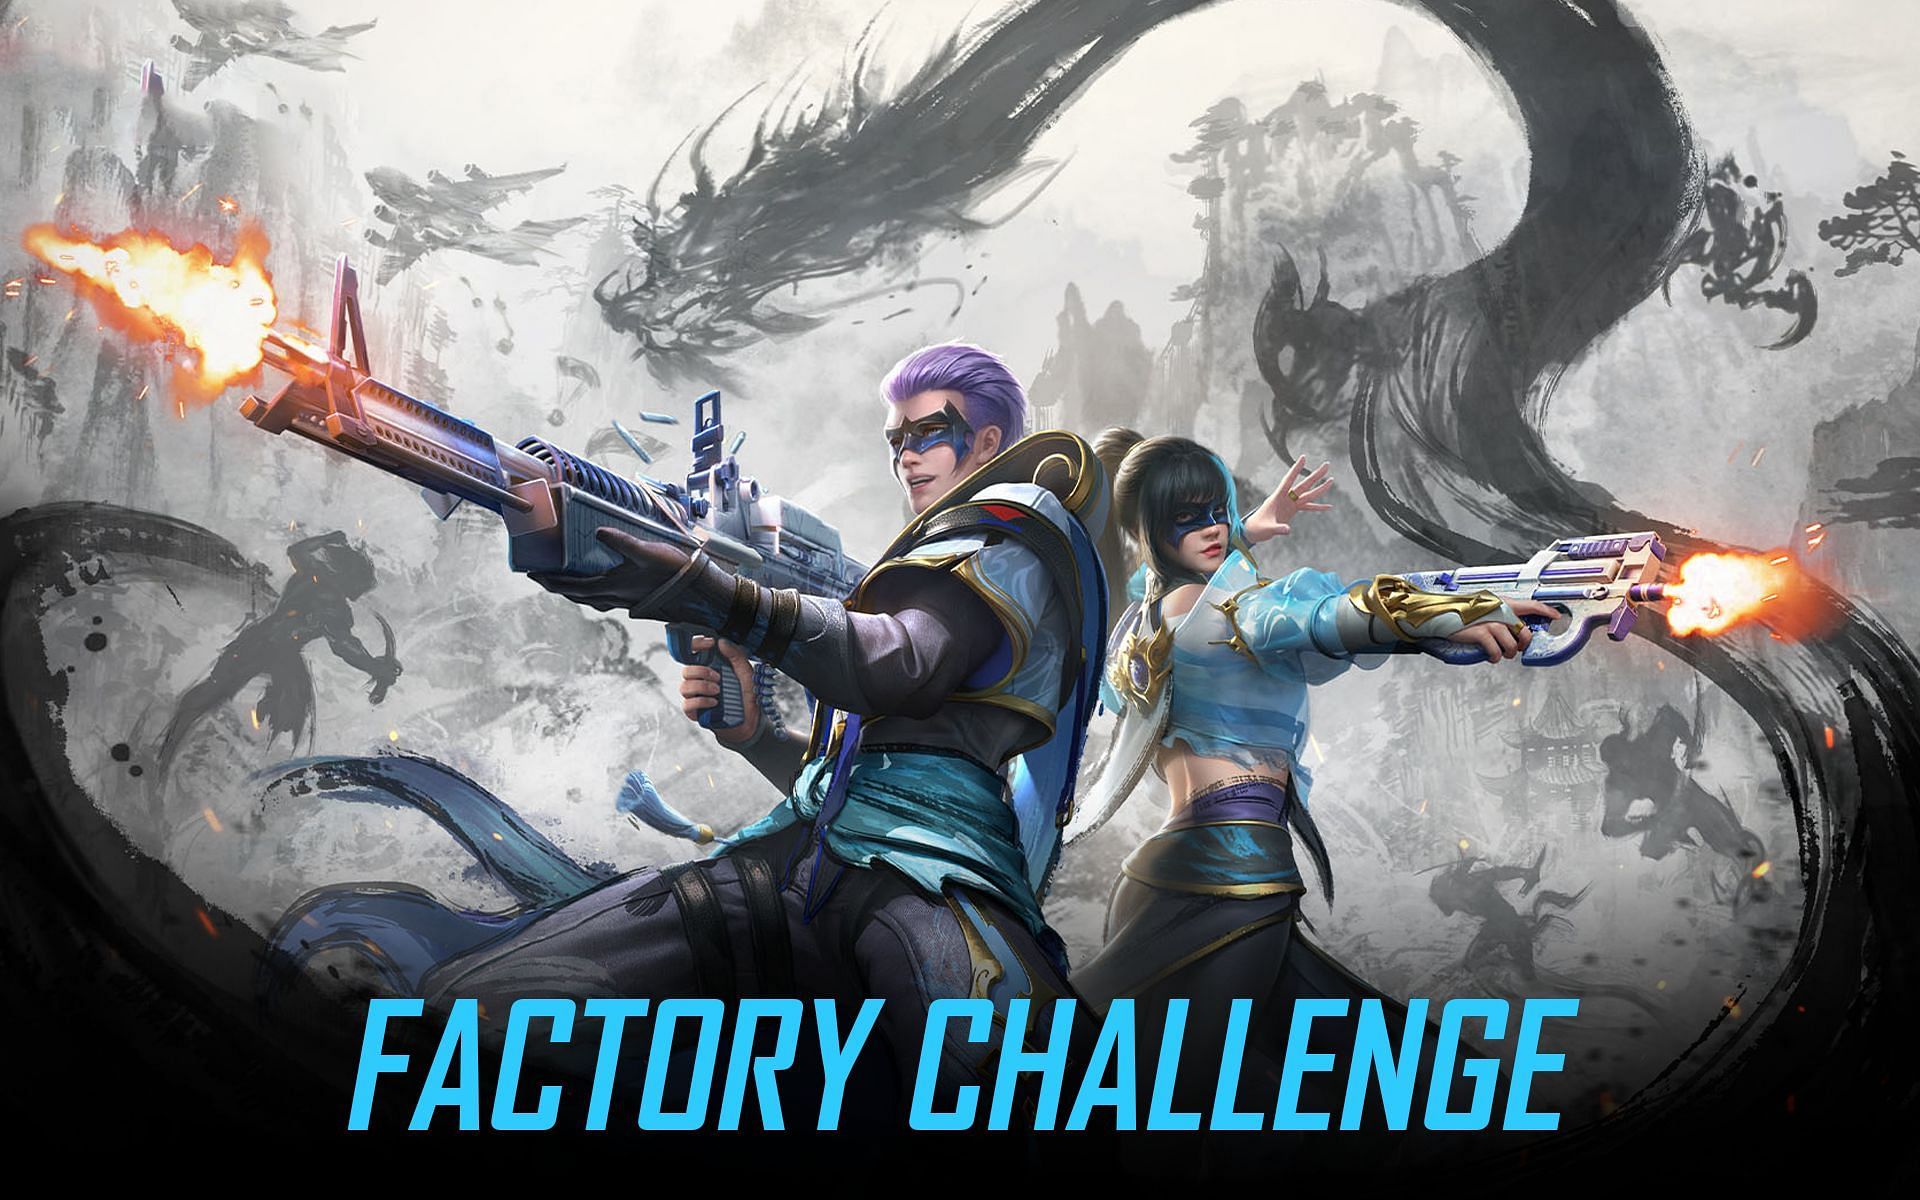 The Factory Challenge is popular in Free Fire (Image via Sportskeeda)